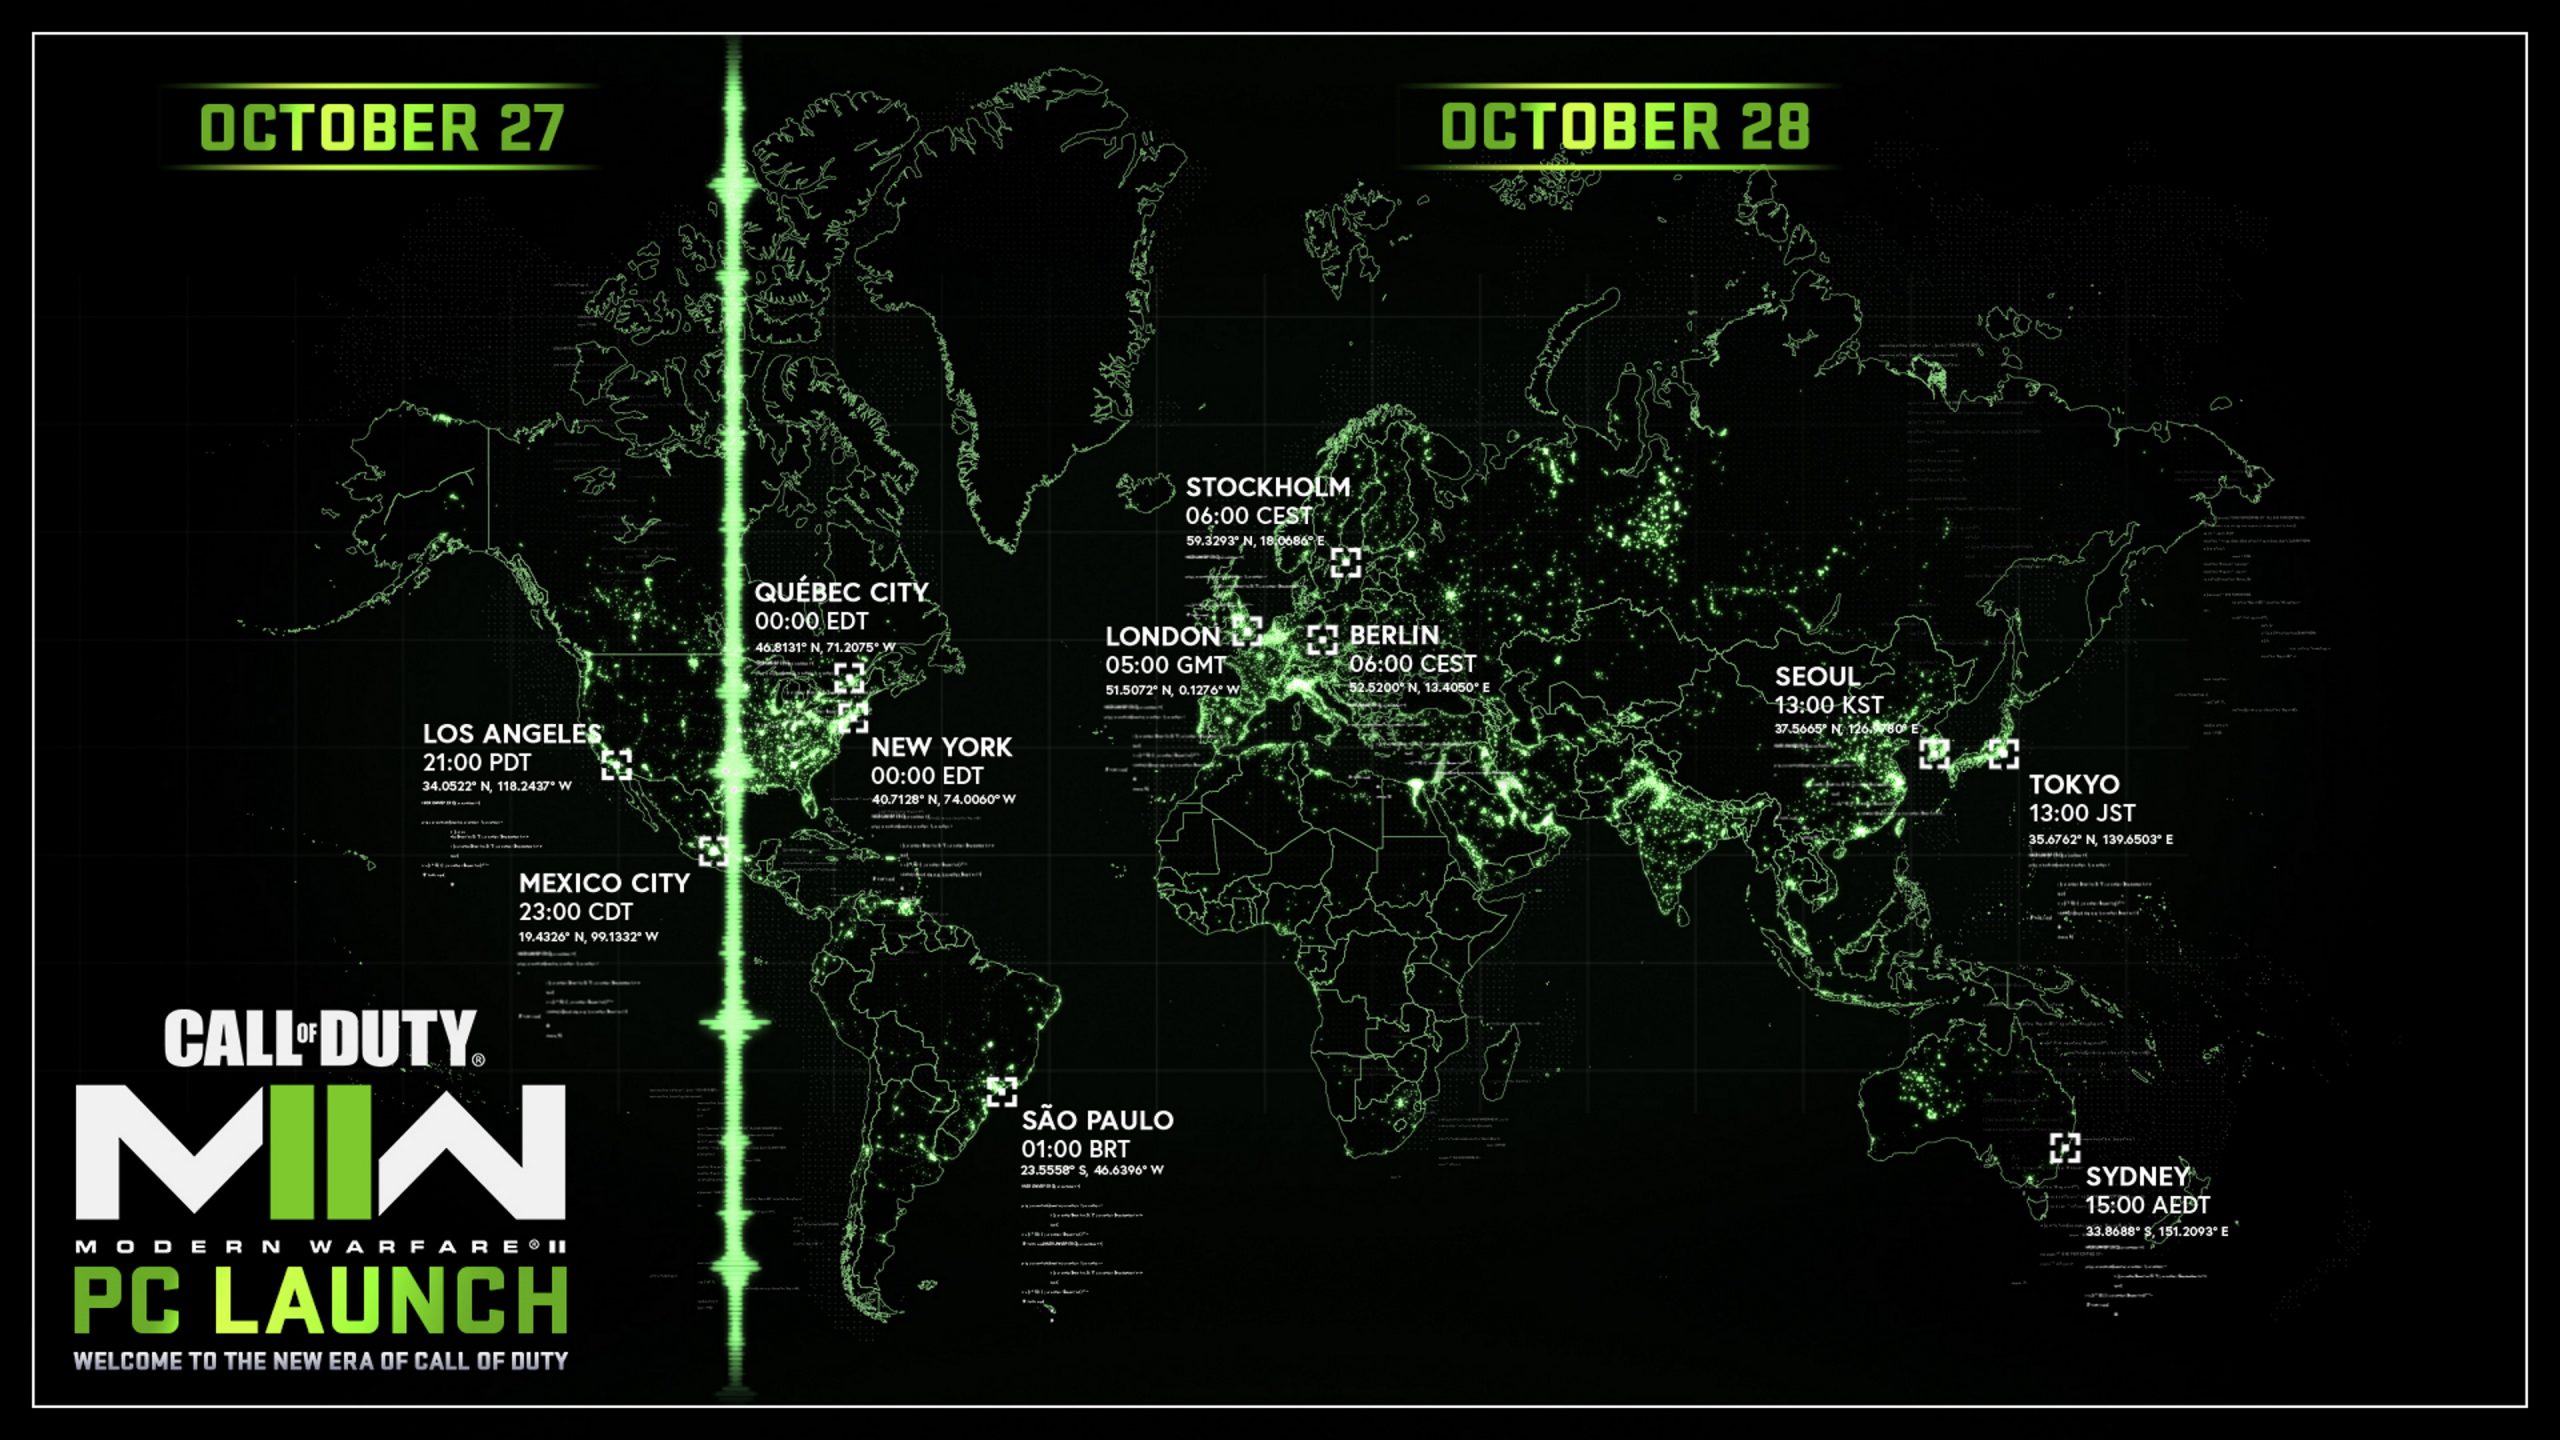 Modern Warfare 2 launch times: the global release schedule